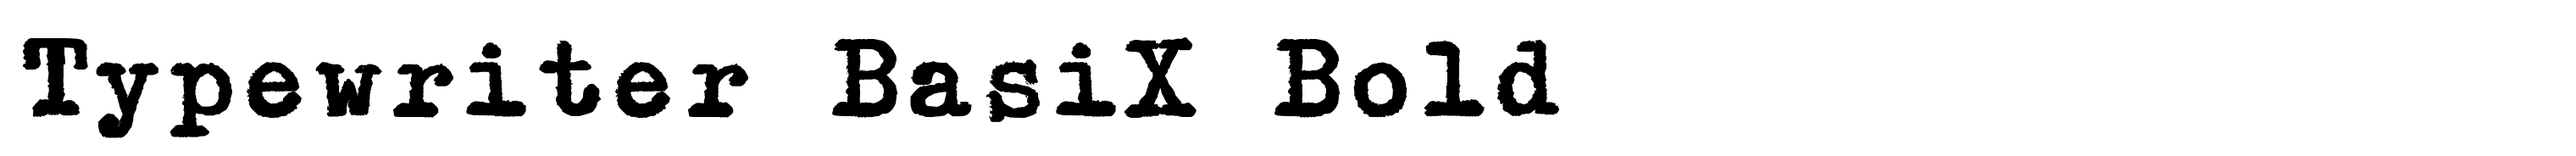 Typewriter BasiX Bold